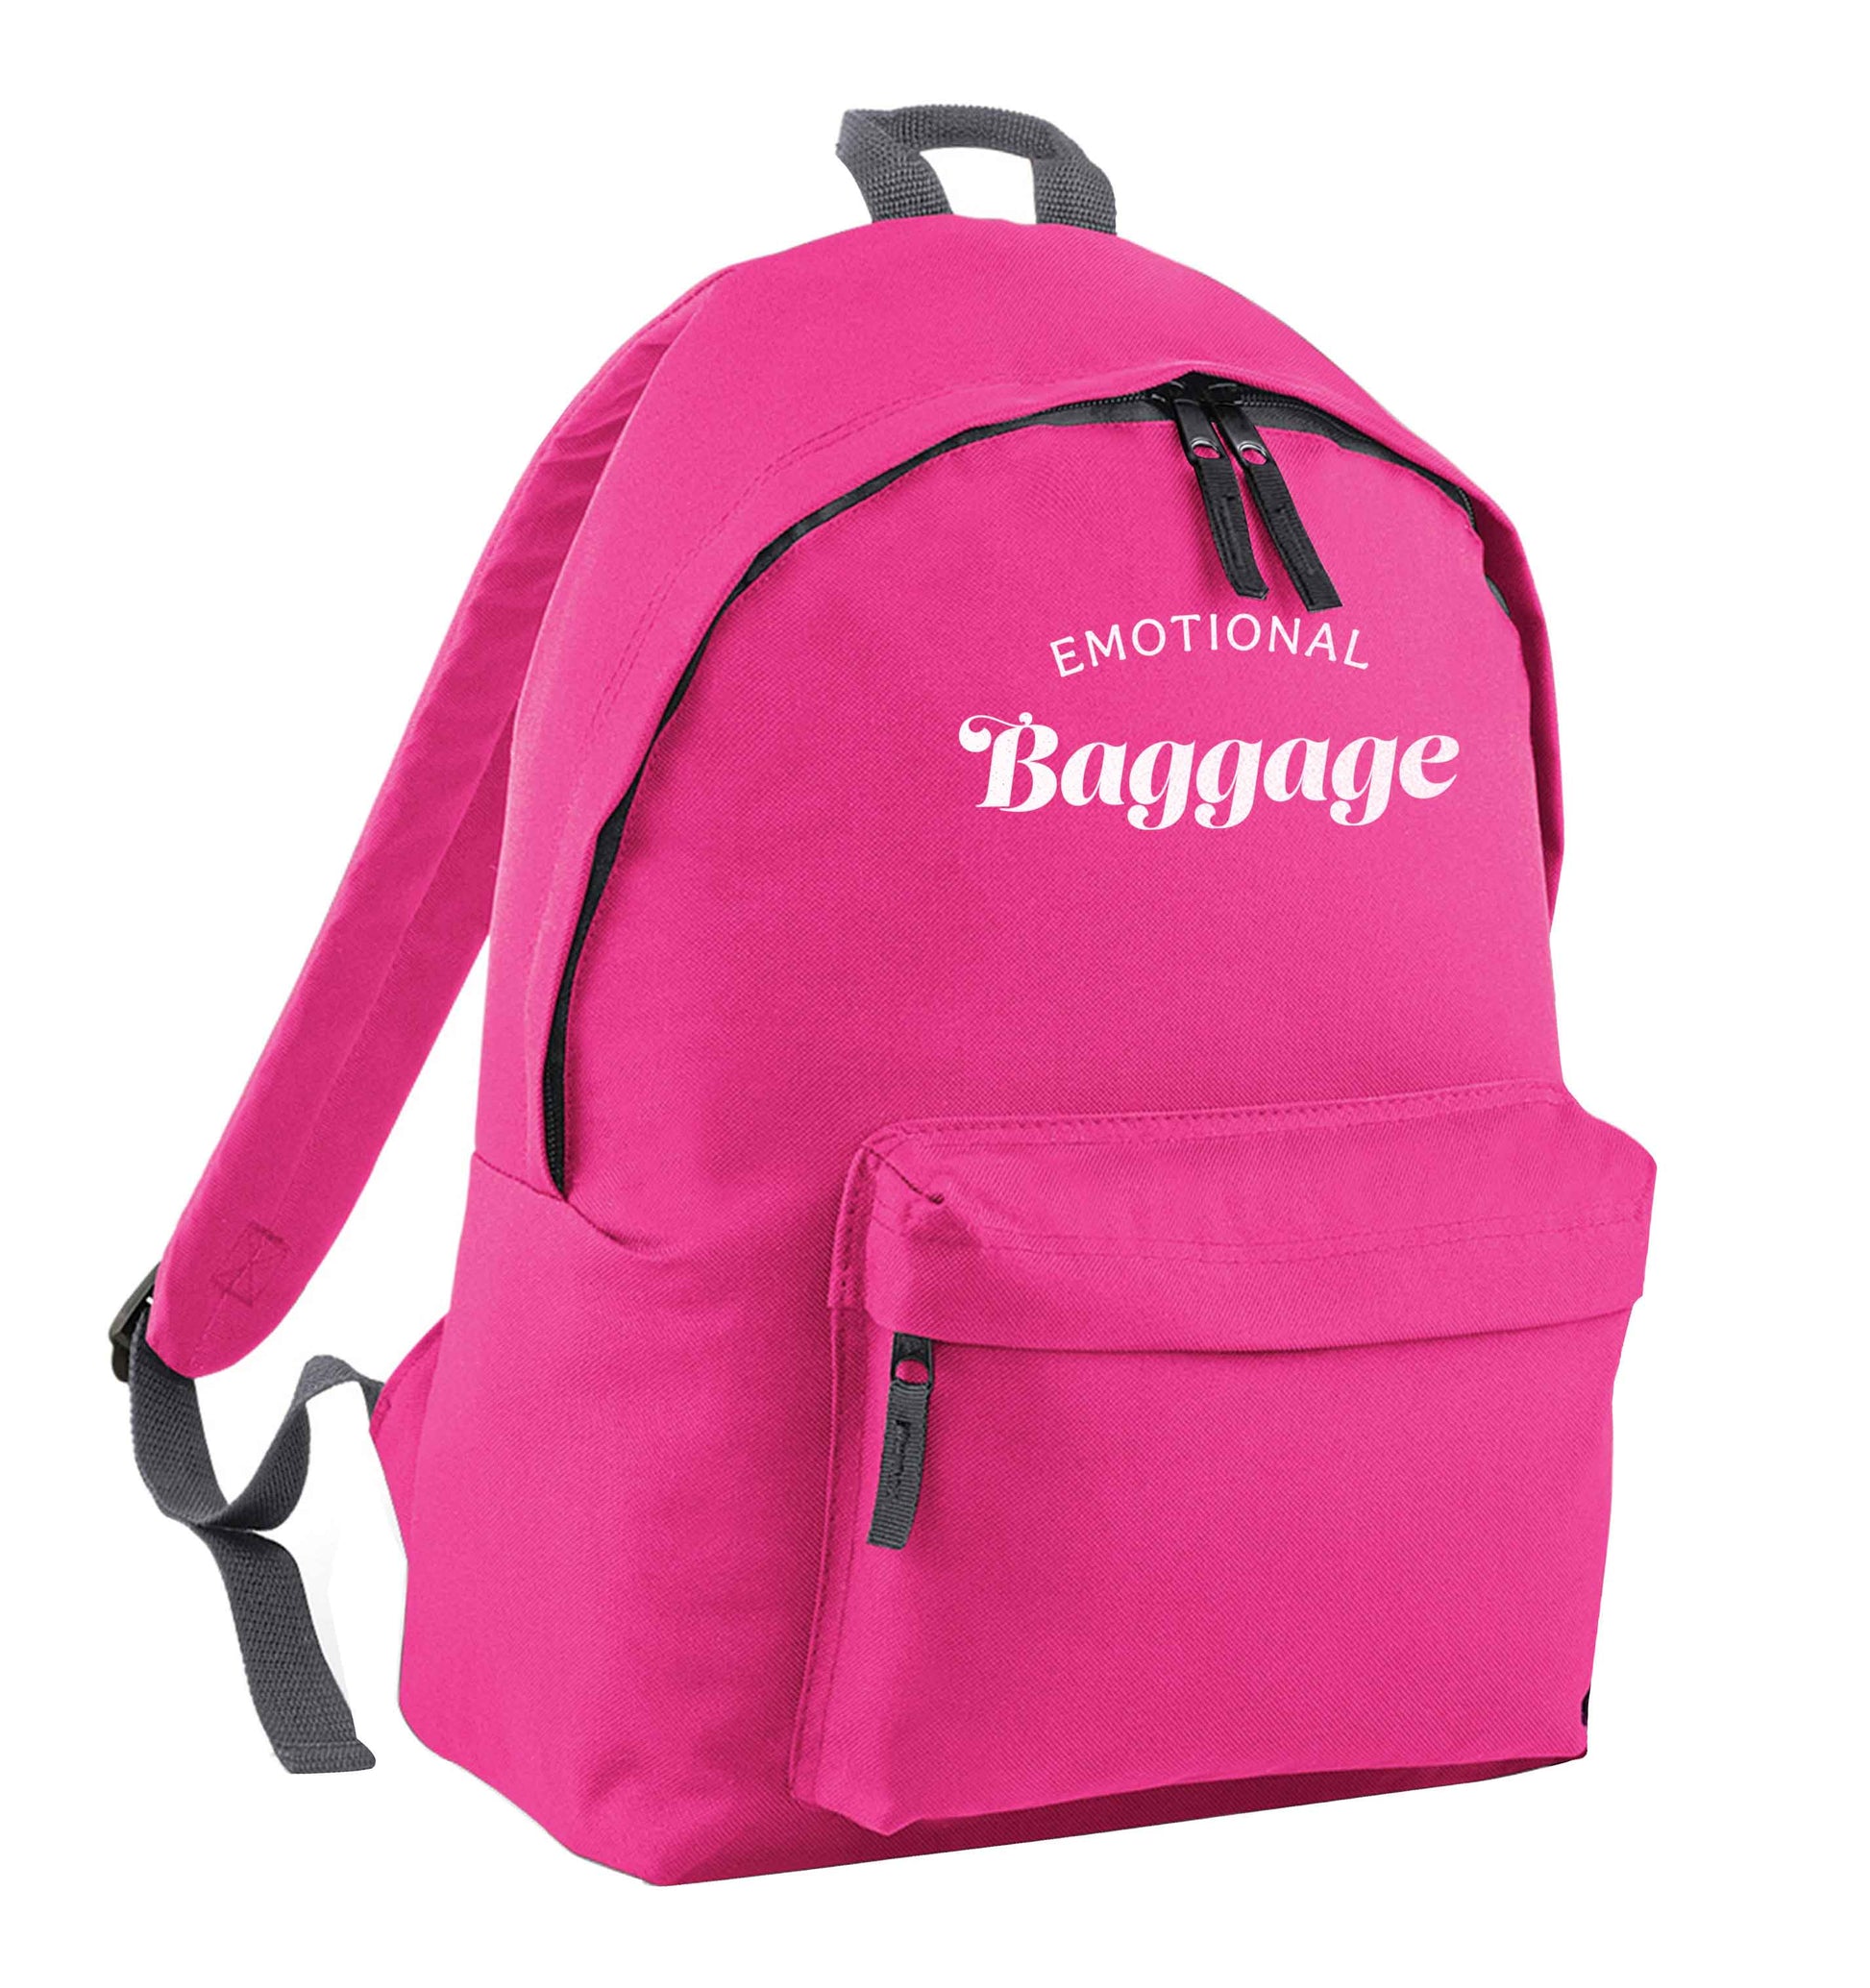 Emotional baggage pink adults backpack